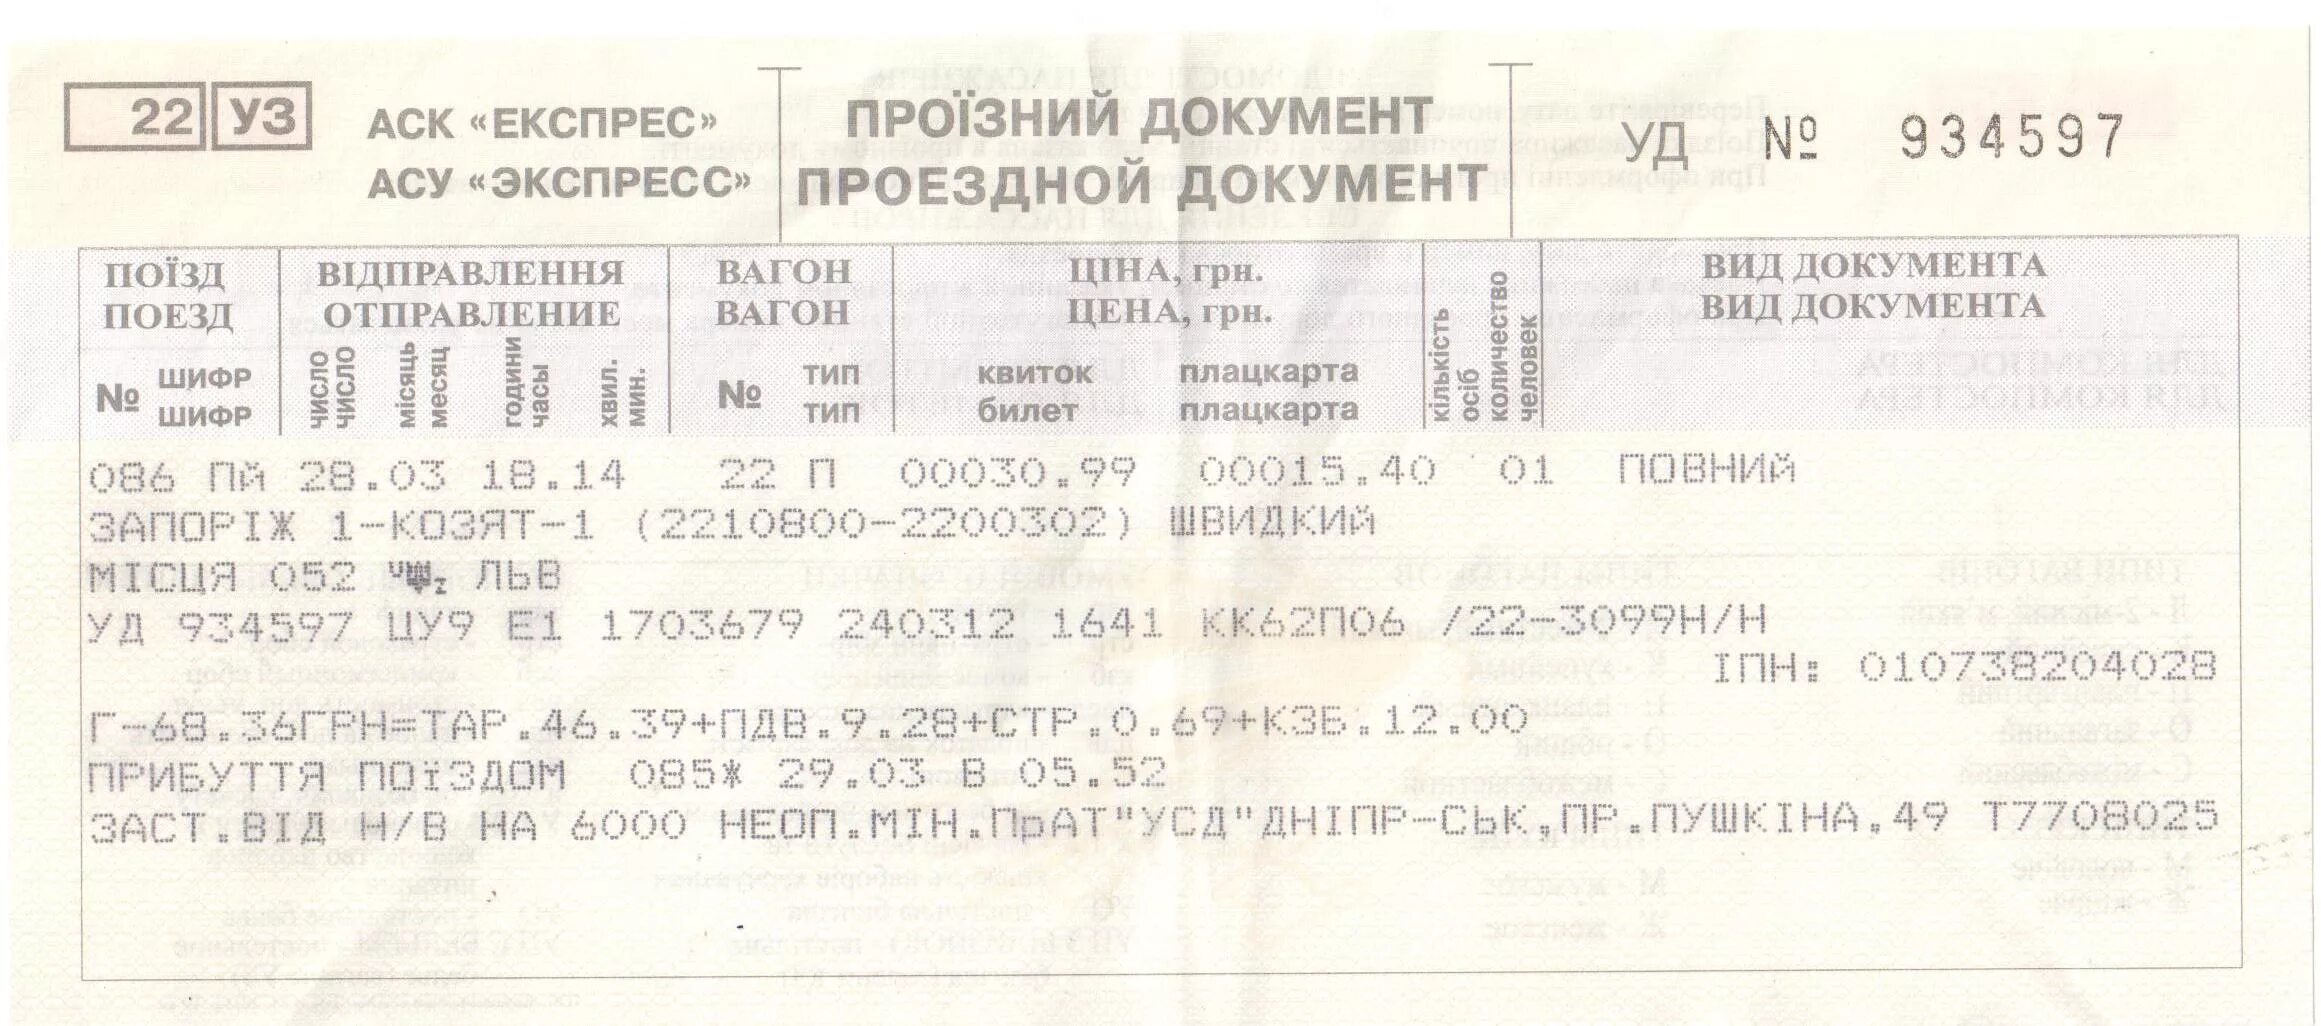 Жд билеты отзывы. ЖД билеты. Билет на поезд. Билеты на поезд Украина. Дубликат железнодорожного билета.